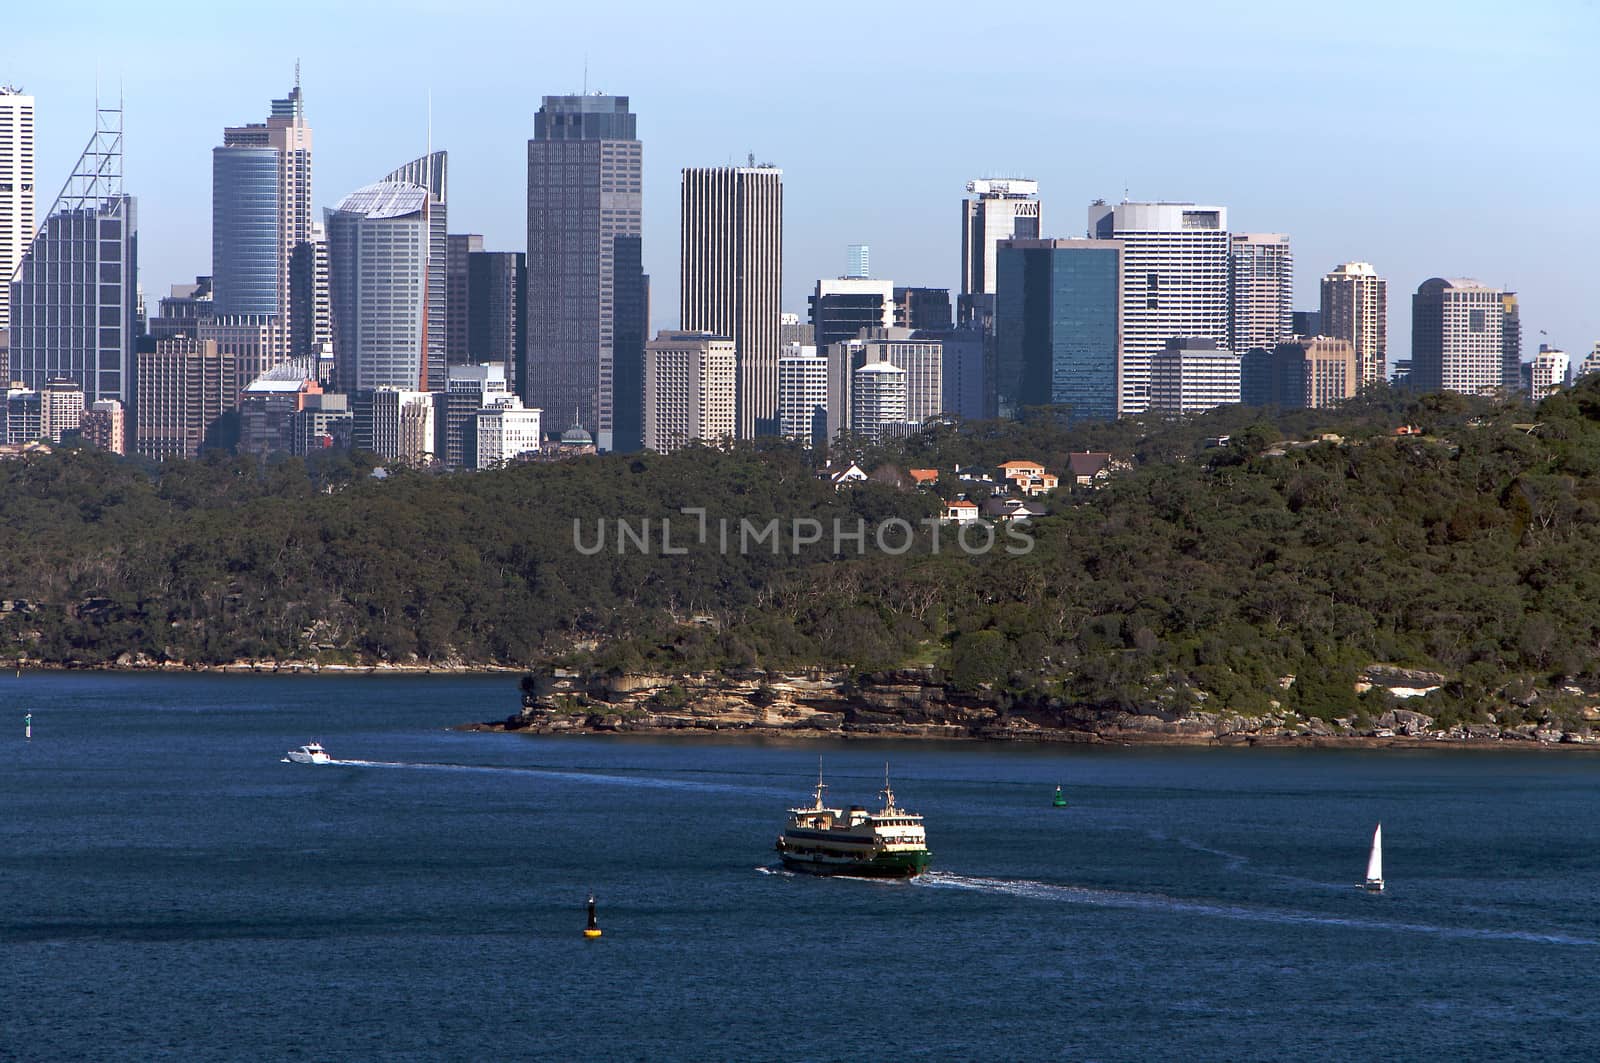 Sydney, City and ferry by instinia